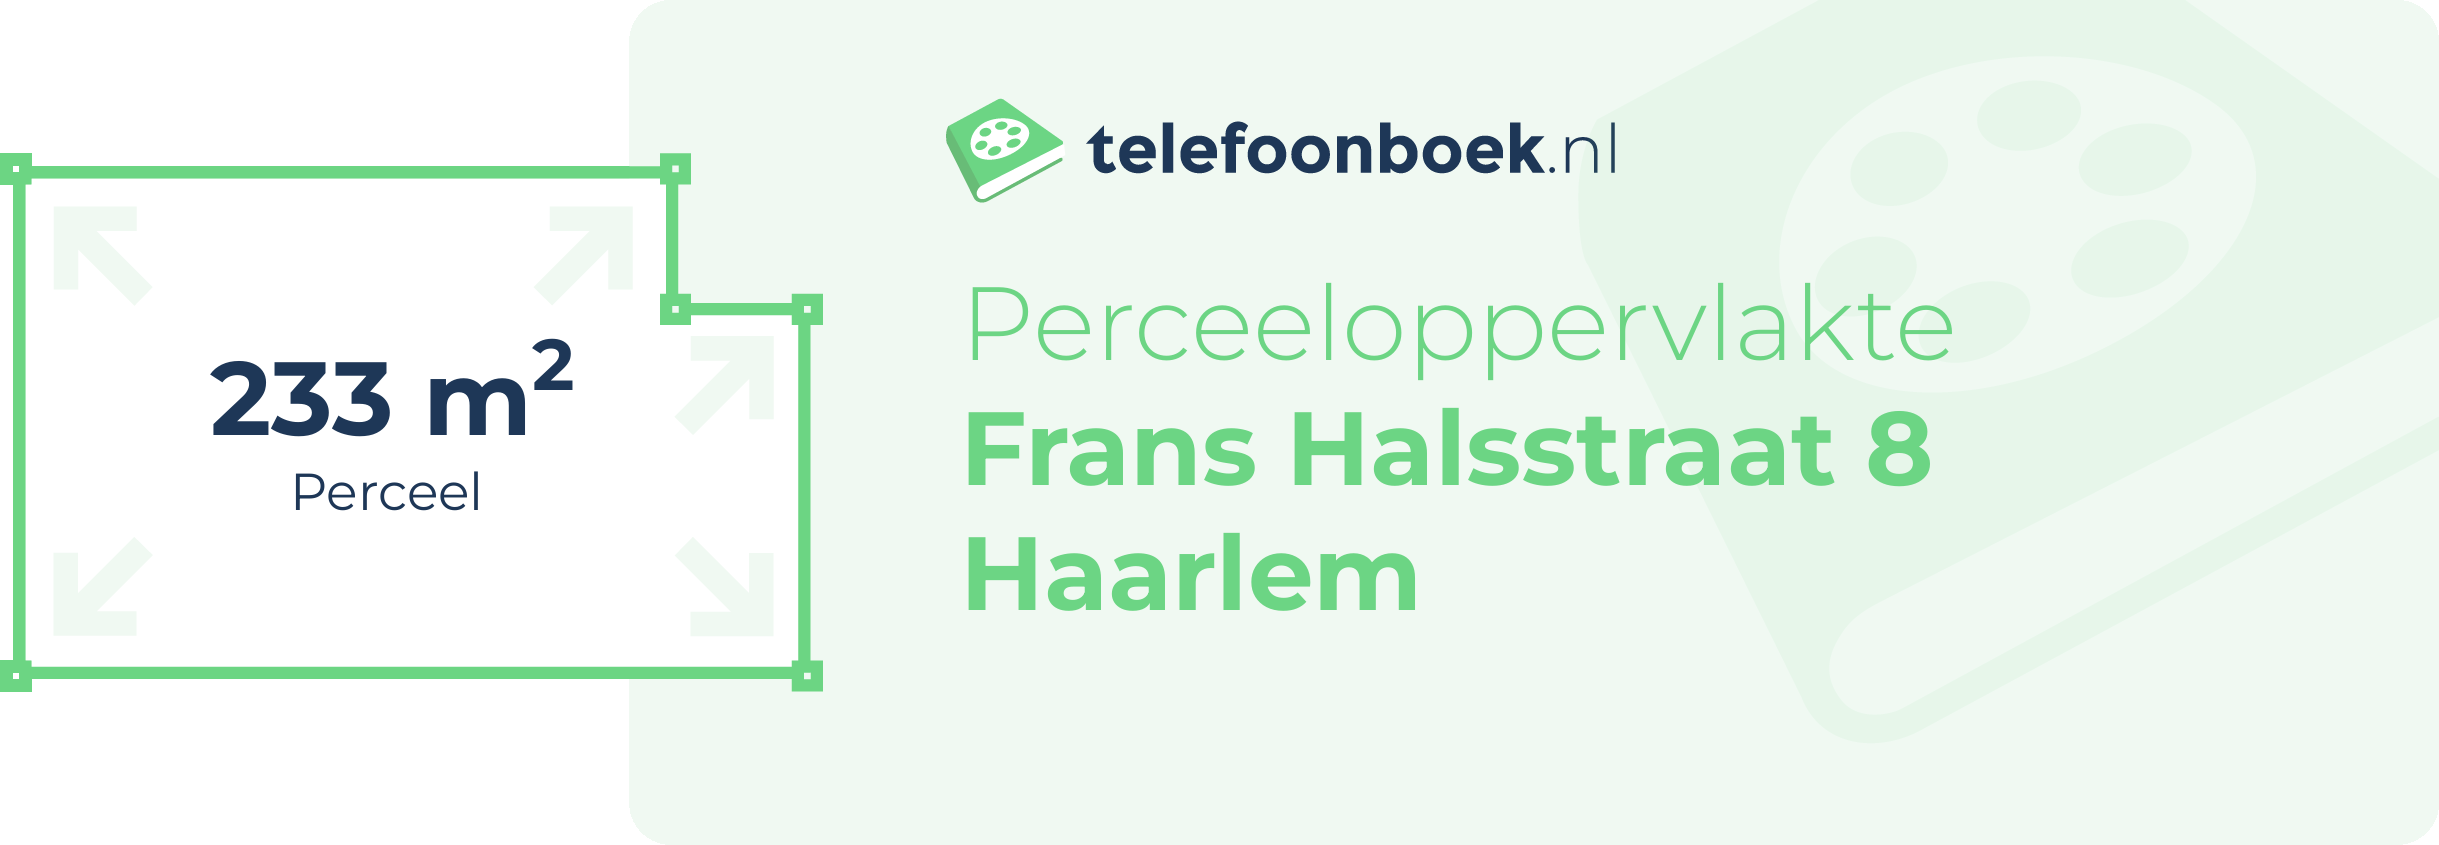 Perceeloppervlakte Frans Halsstraat 8 Haarlem